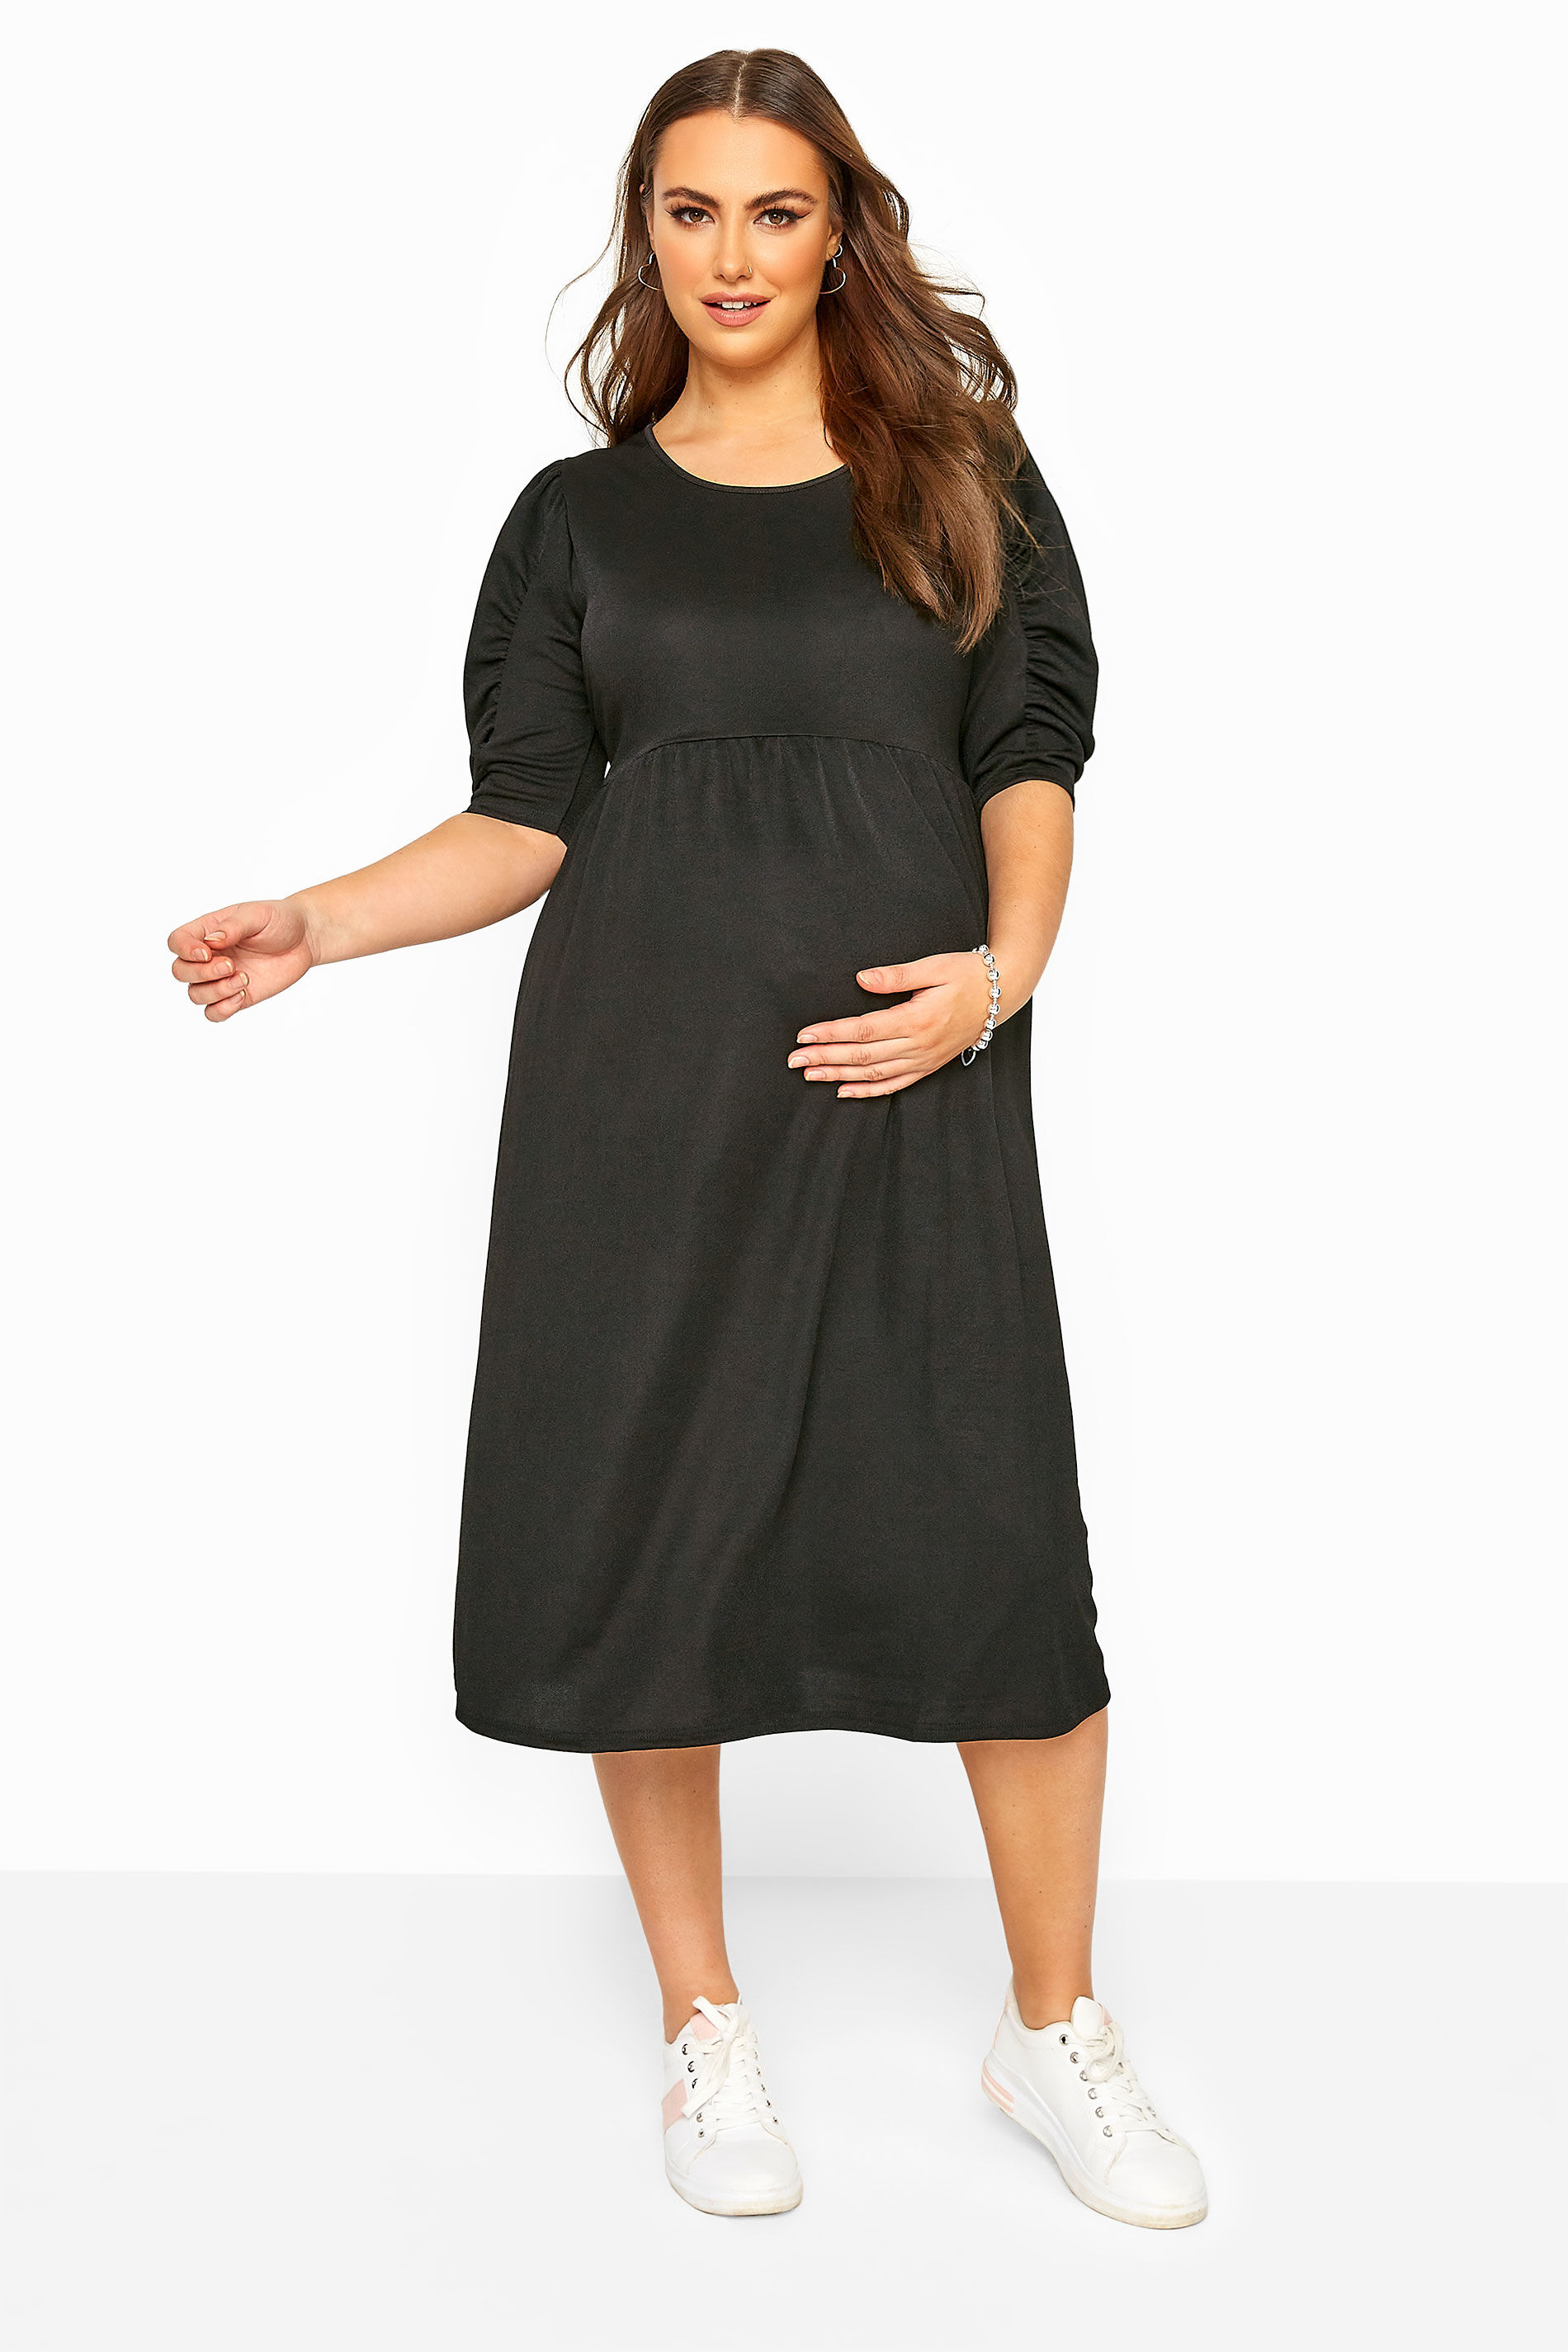 Yours Clothing Bump it up maternity black jersey smock midi dress